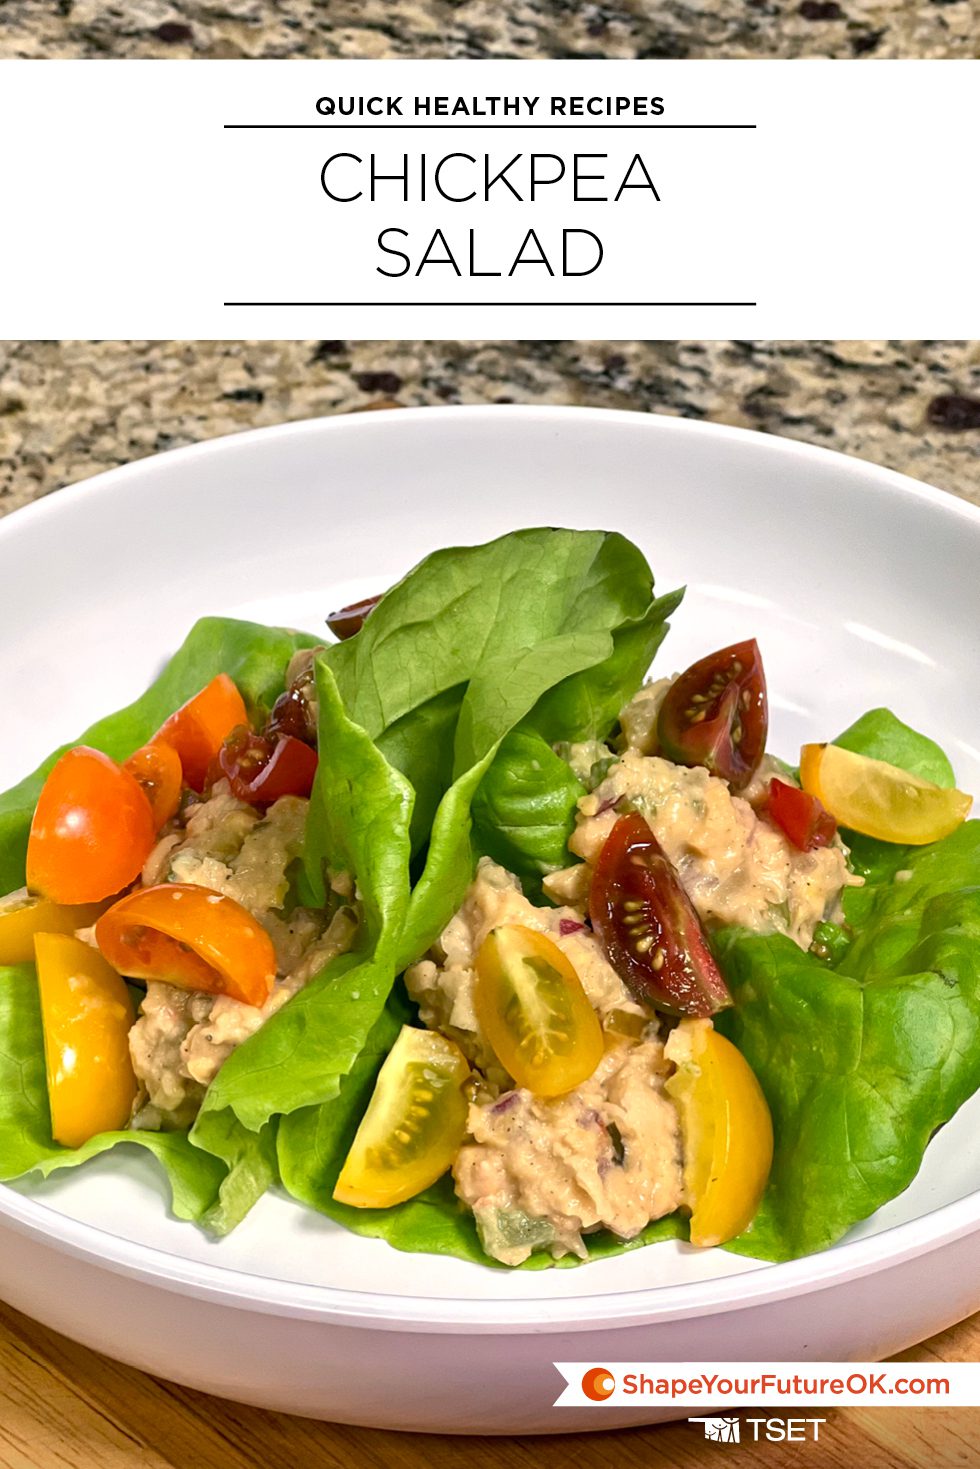 Chickpea salad - quick healthy recipes